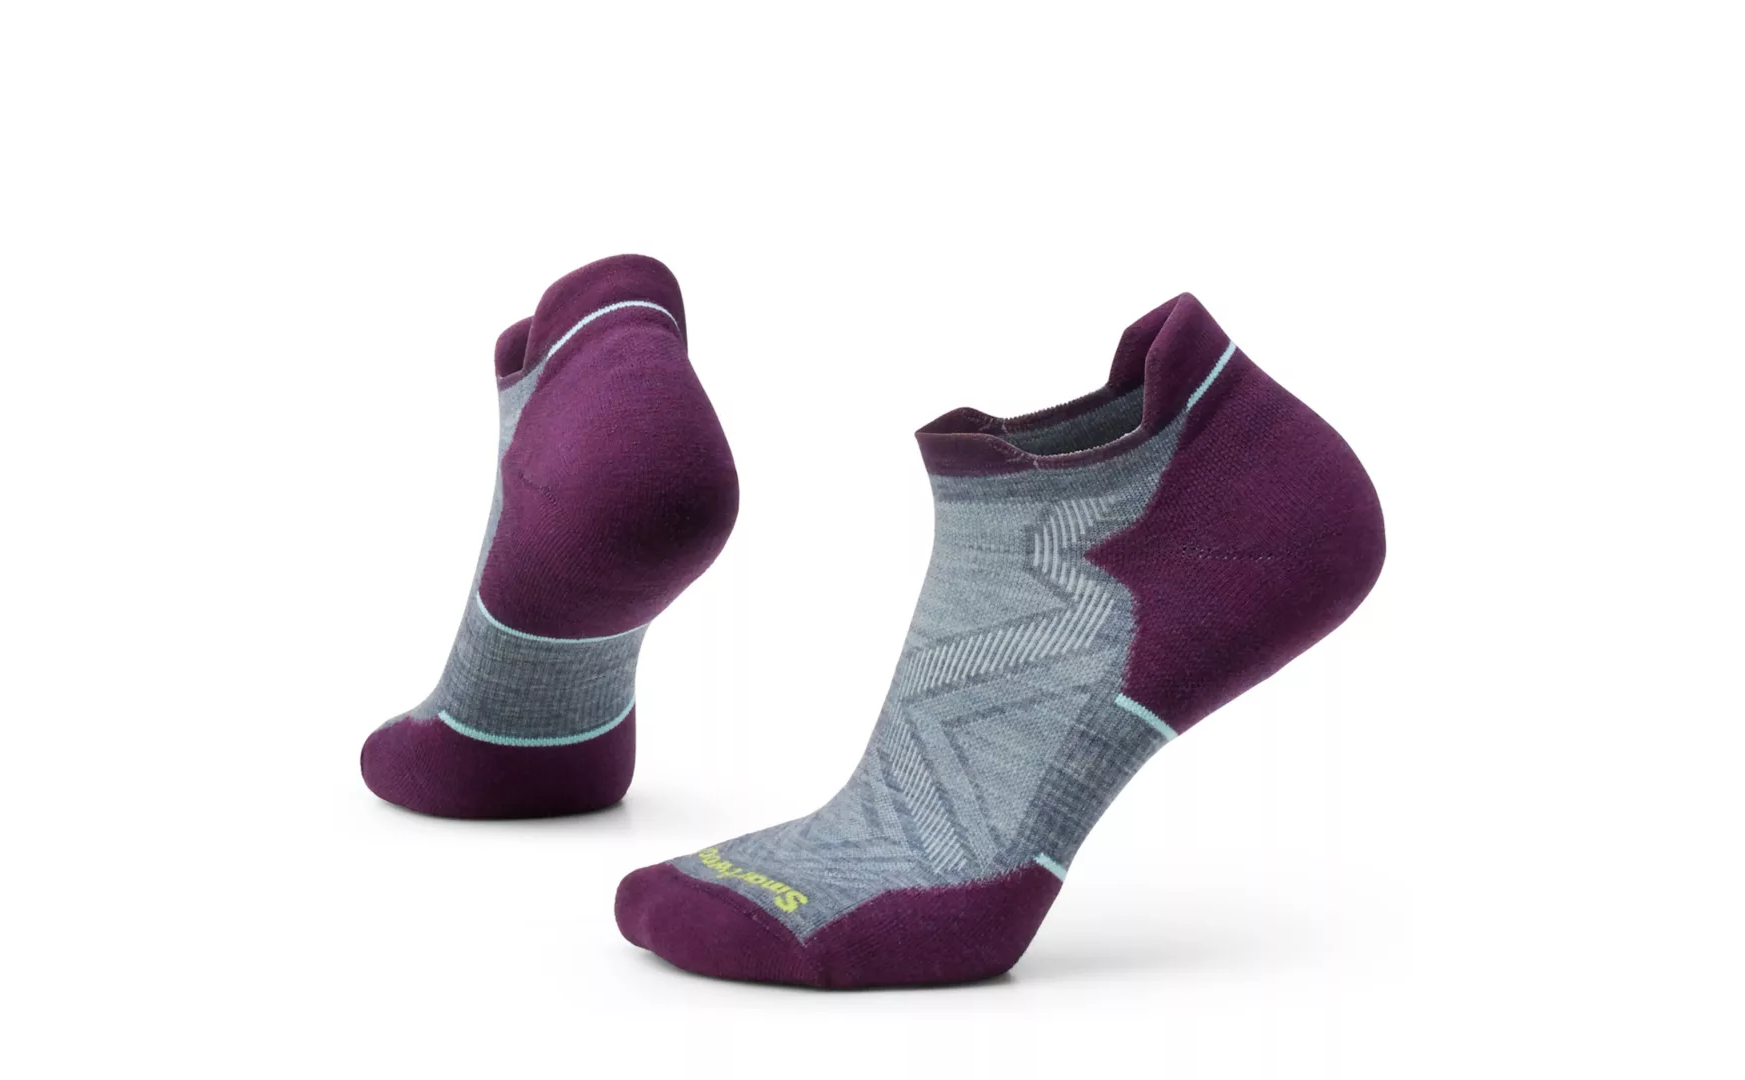 SmartWool PhD Run Ultra Light Low Cut Women's Socks - Running